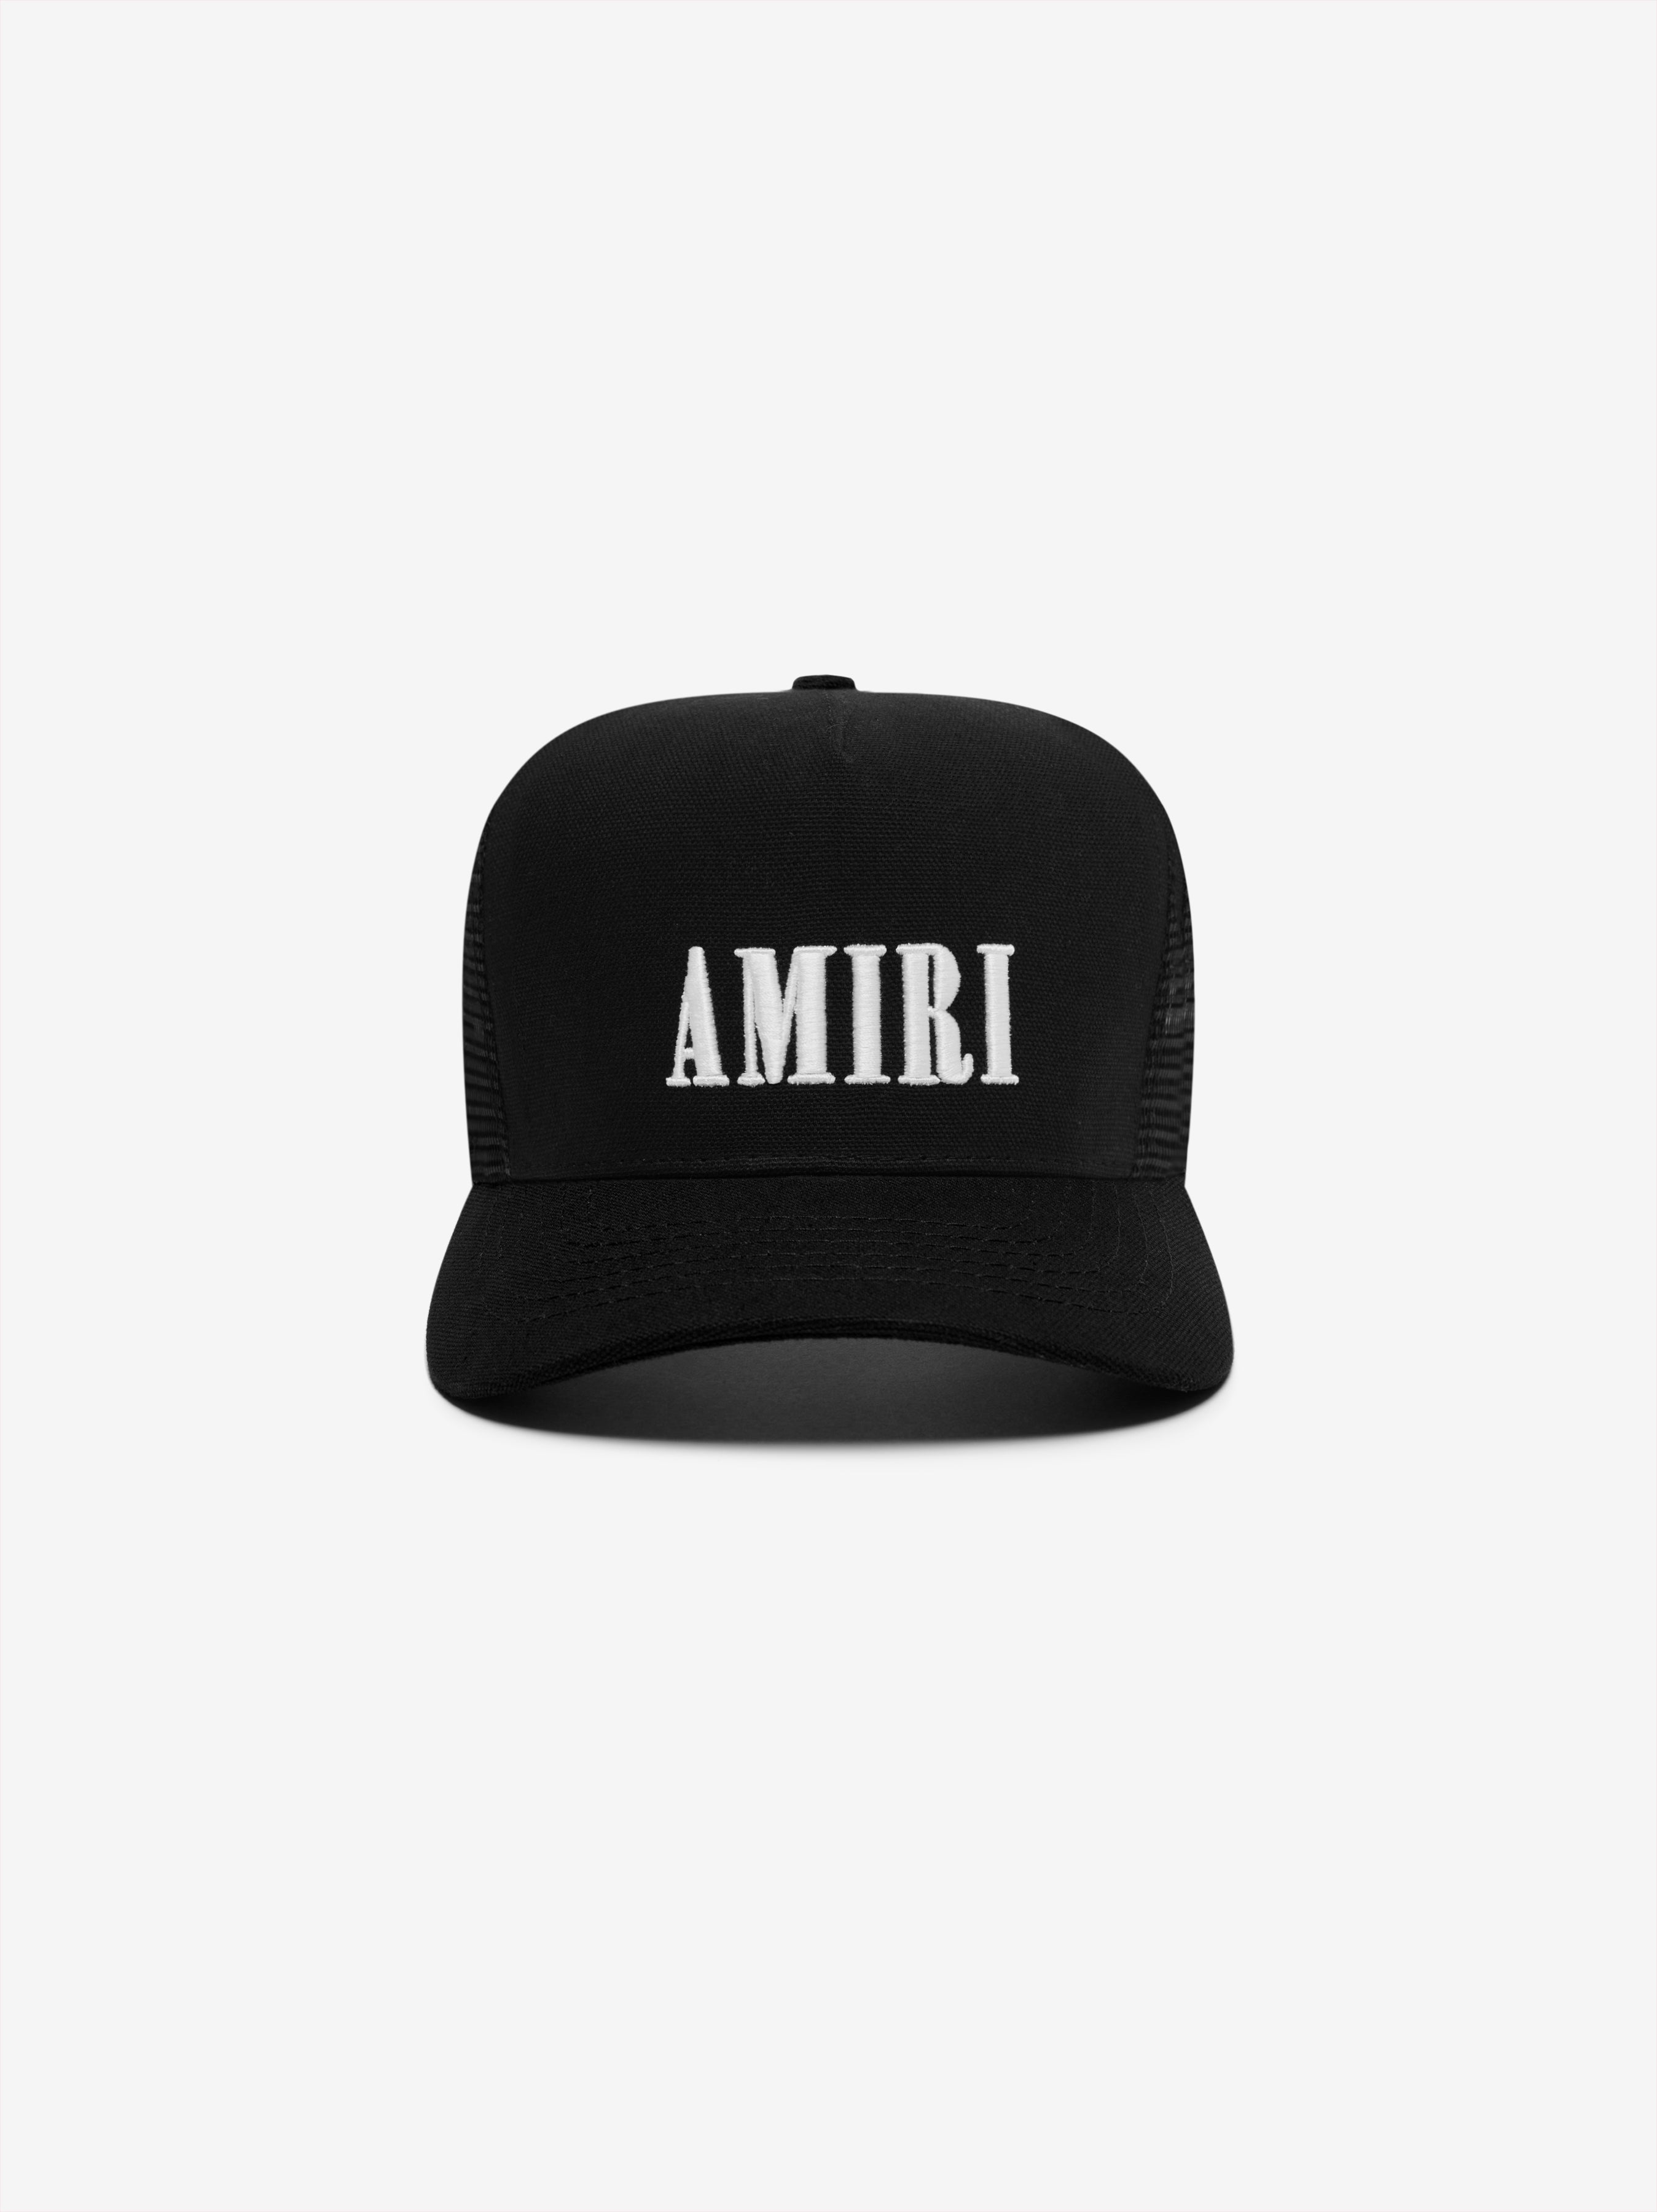 Product AMIRI CORE LOGO TRUCKER HAT - BLACK WHITE featured image